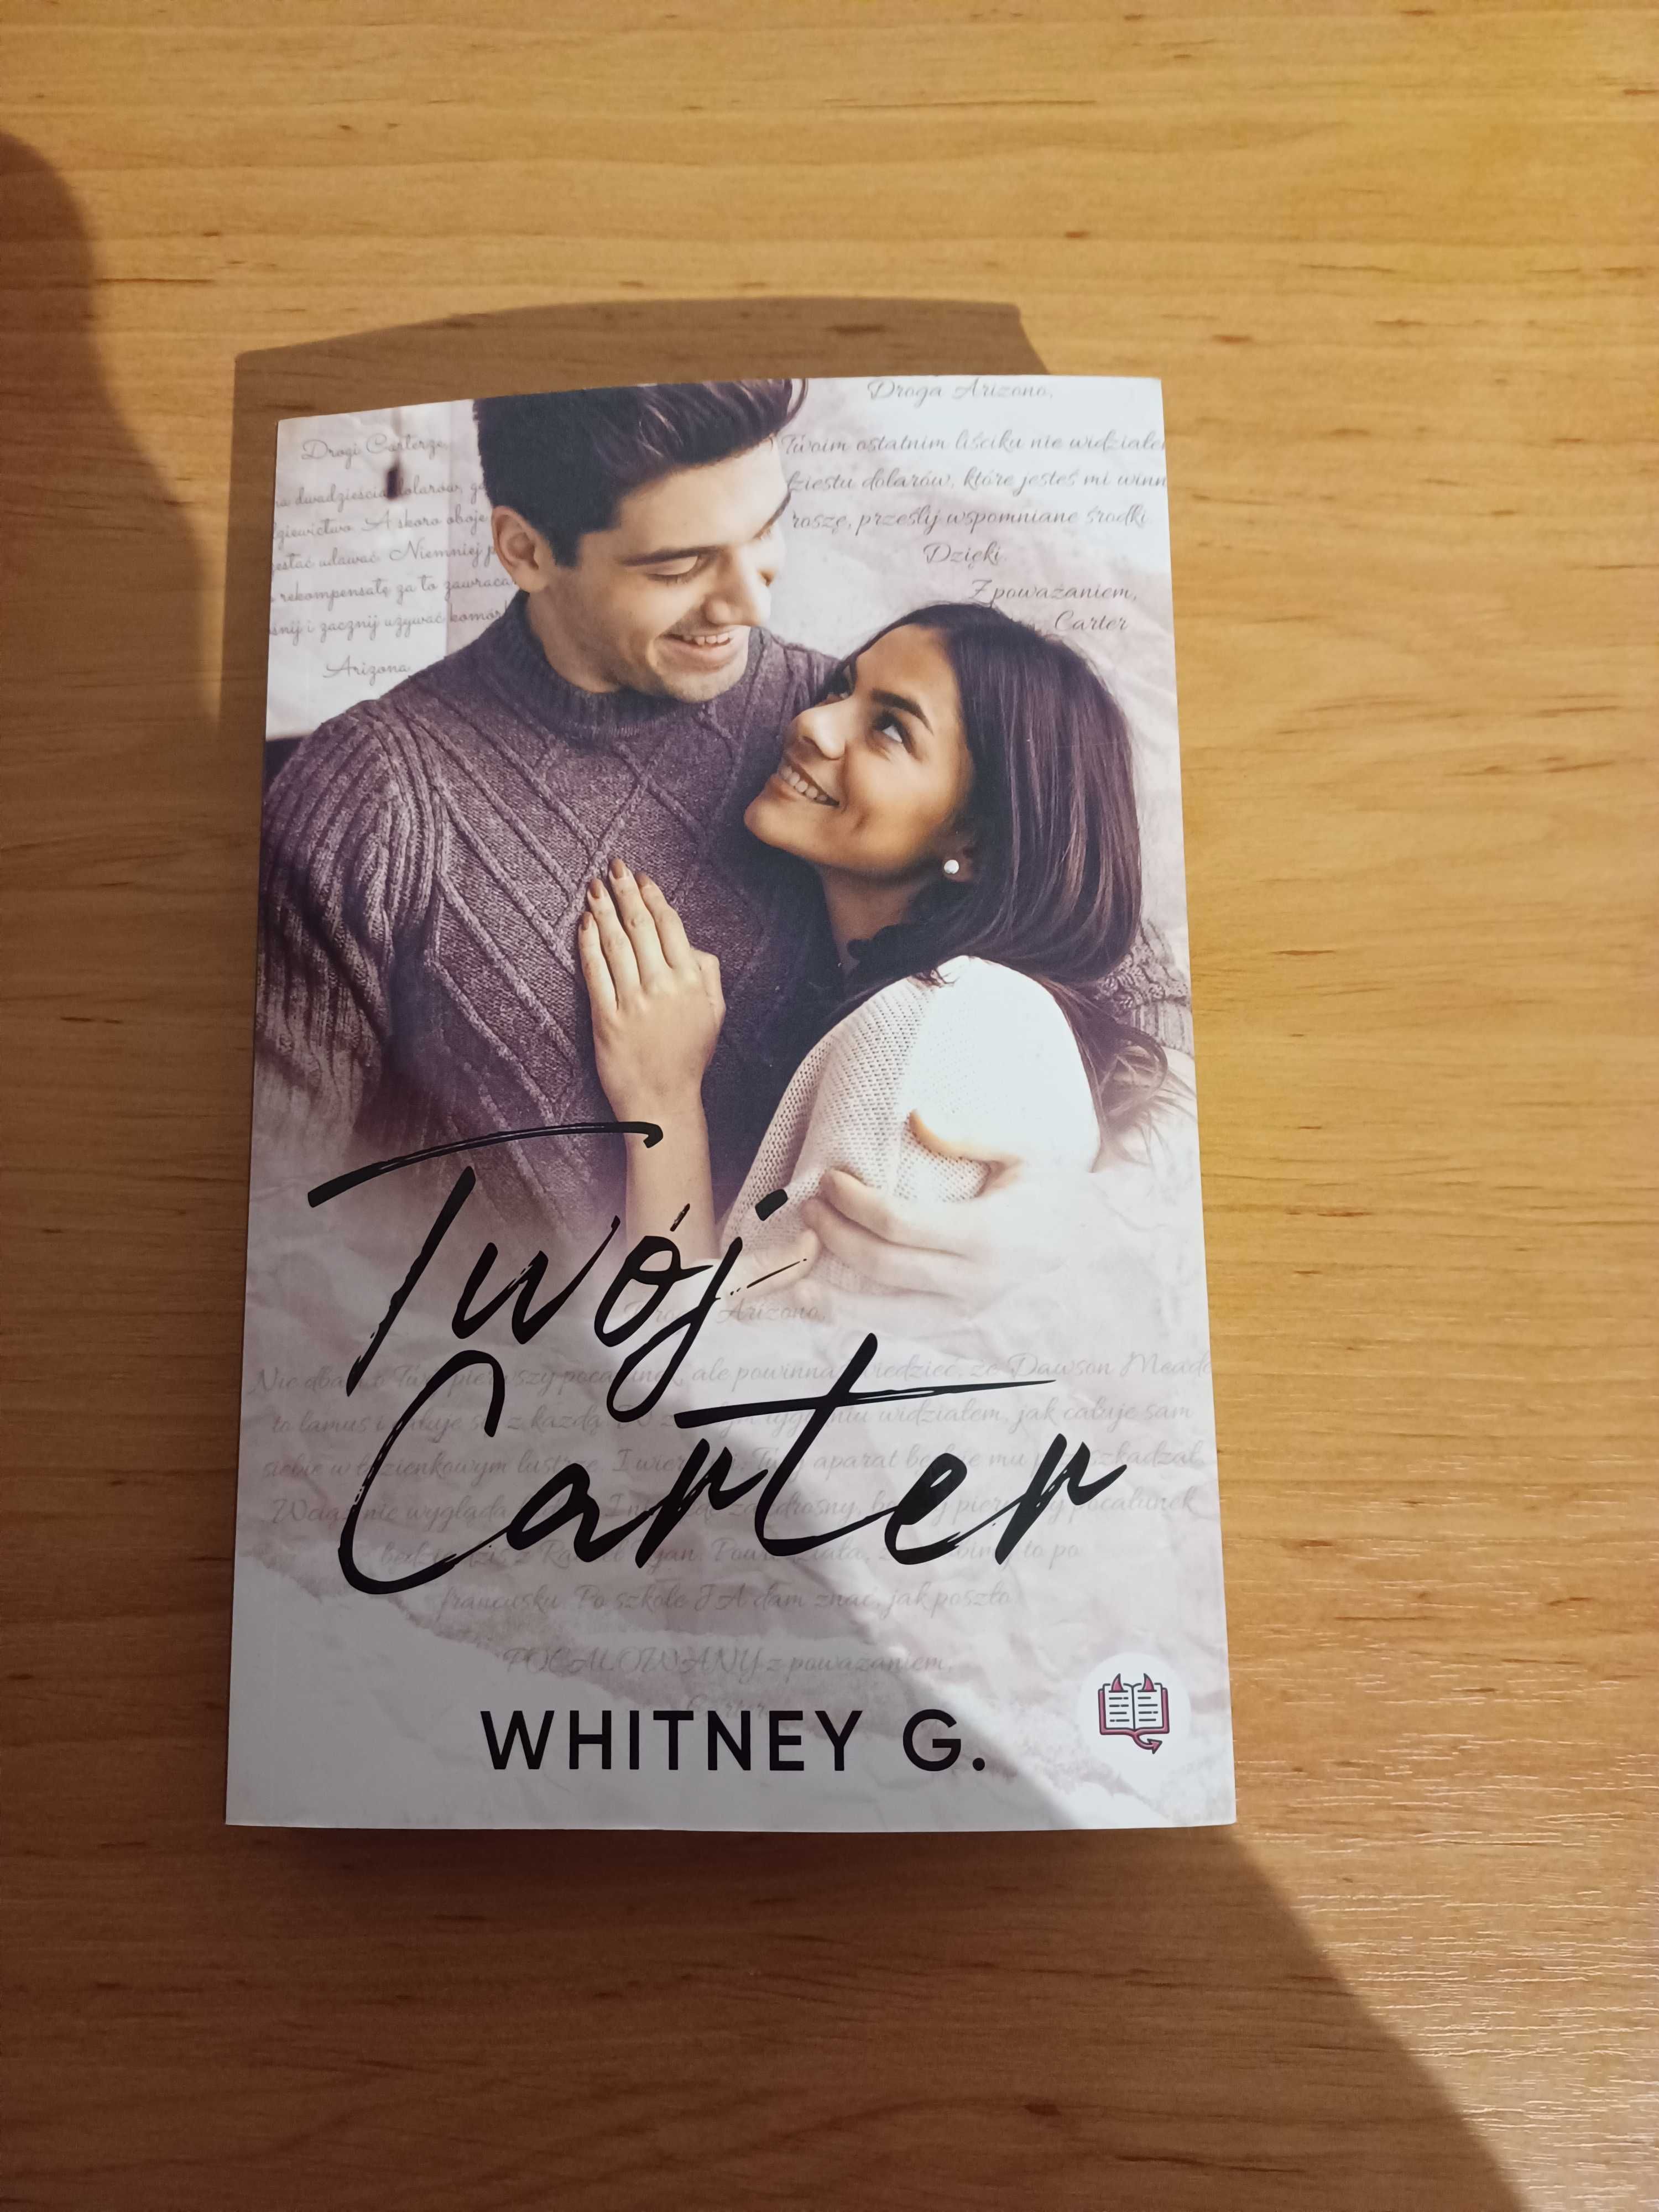 Whitney G. "Twój Carter"